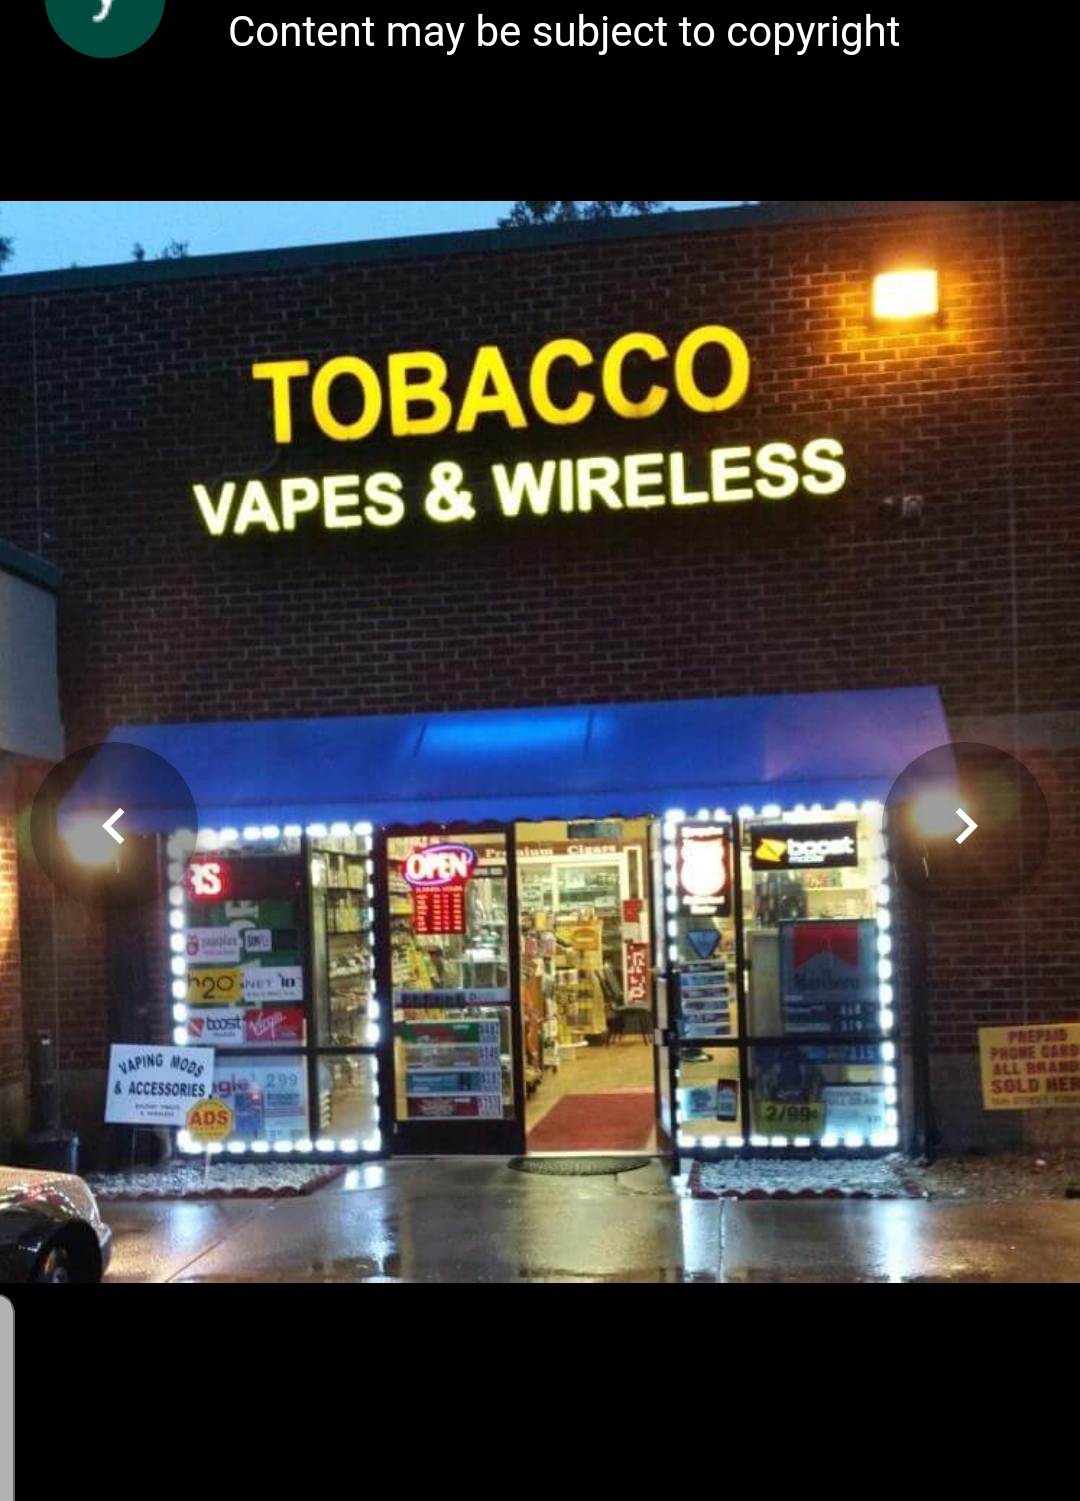 Beaufort Tobacco' Vapes & Wireless